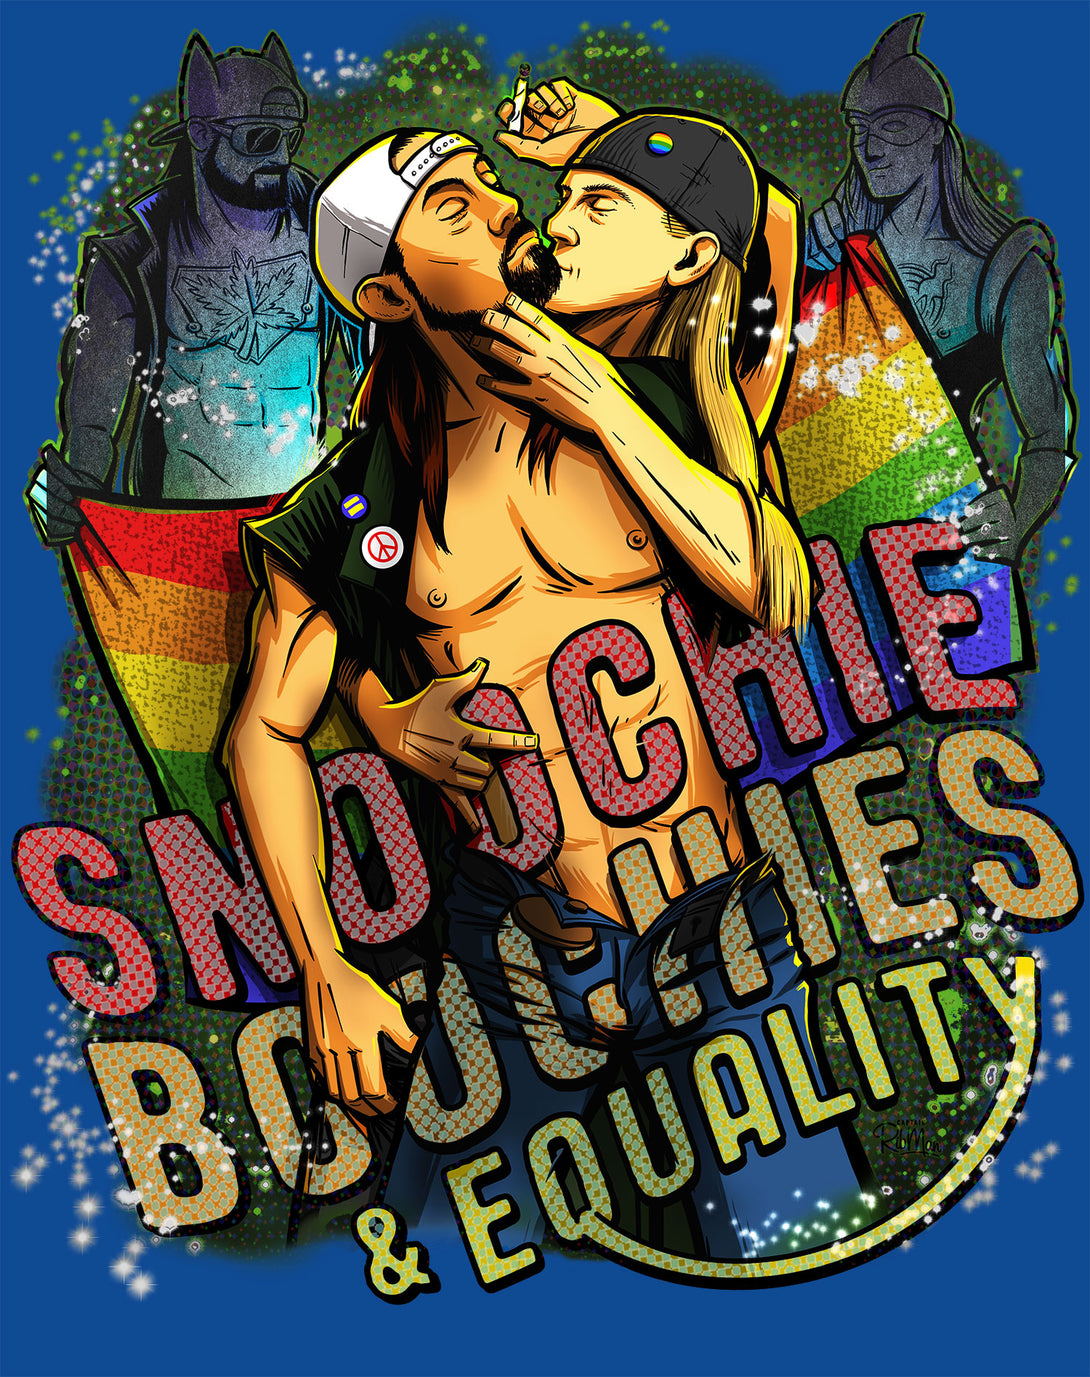 Kevin Smith Jay & Silent Bob Reboot LGBTQ Splash LDN Edition Official Men's T-Shirt Blue - Urban Species Design Close Up